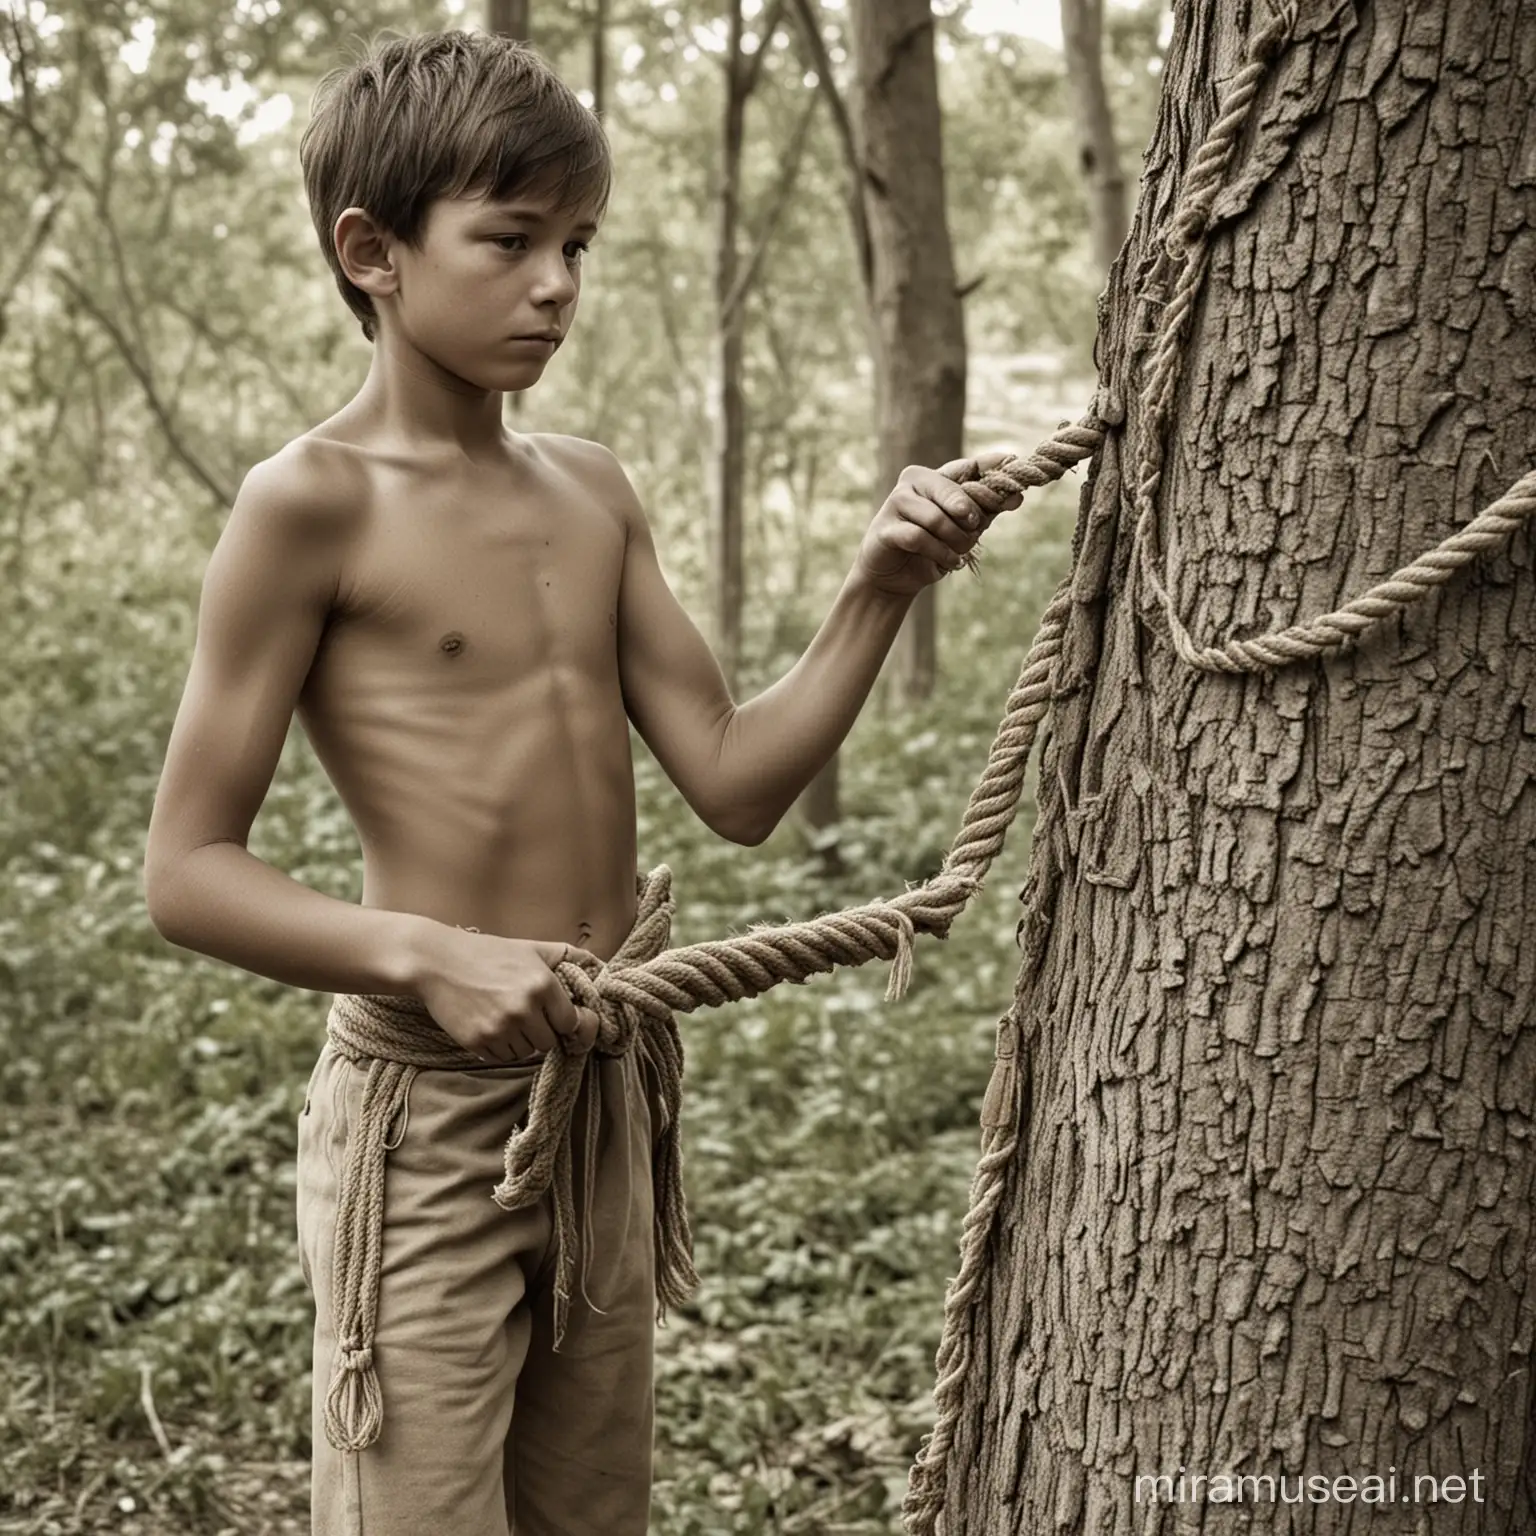 Teenage Boy Tied to Tree Playing Indian Game